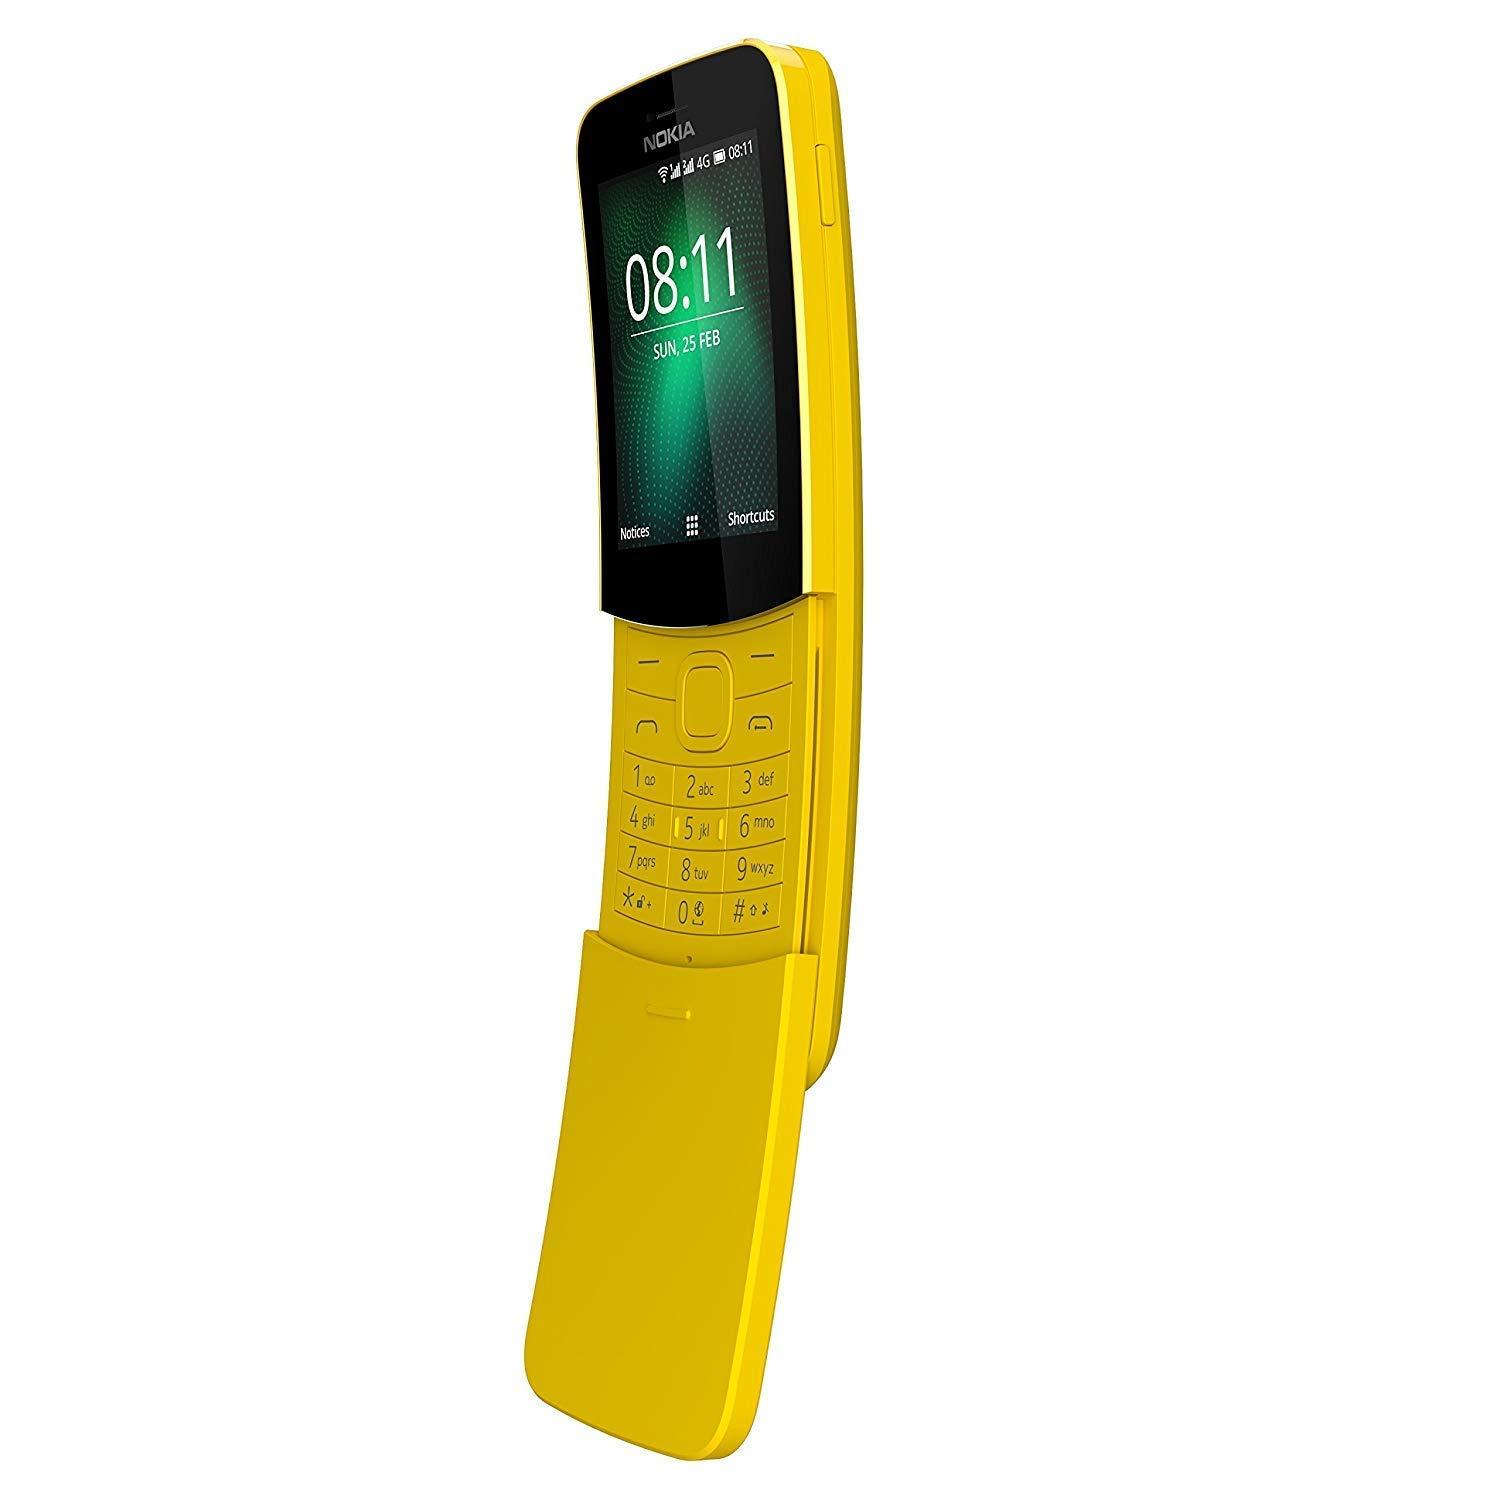 Nokia 8110 4G Mobile Phone